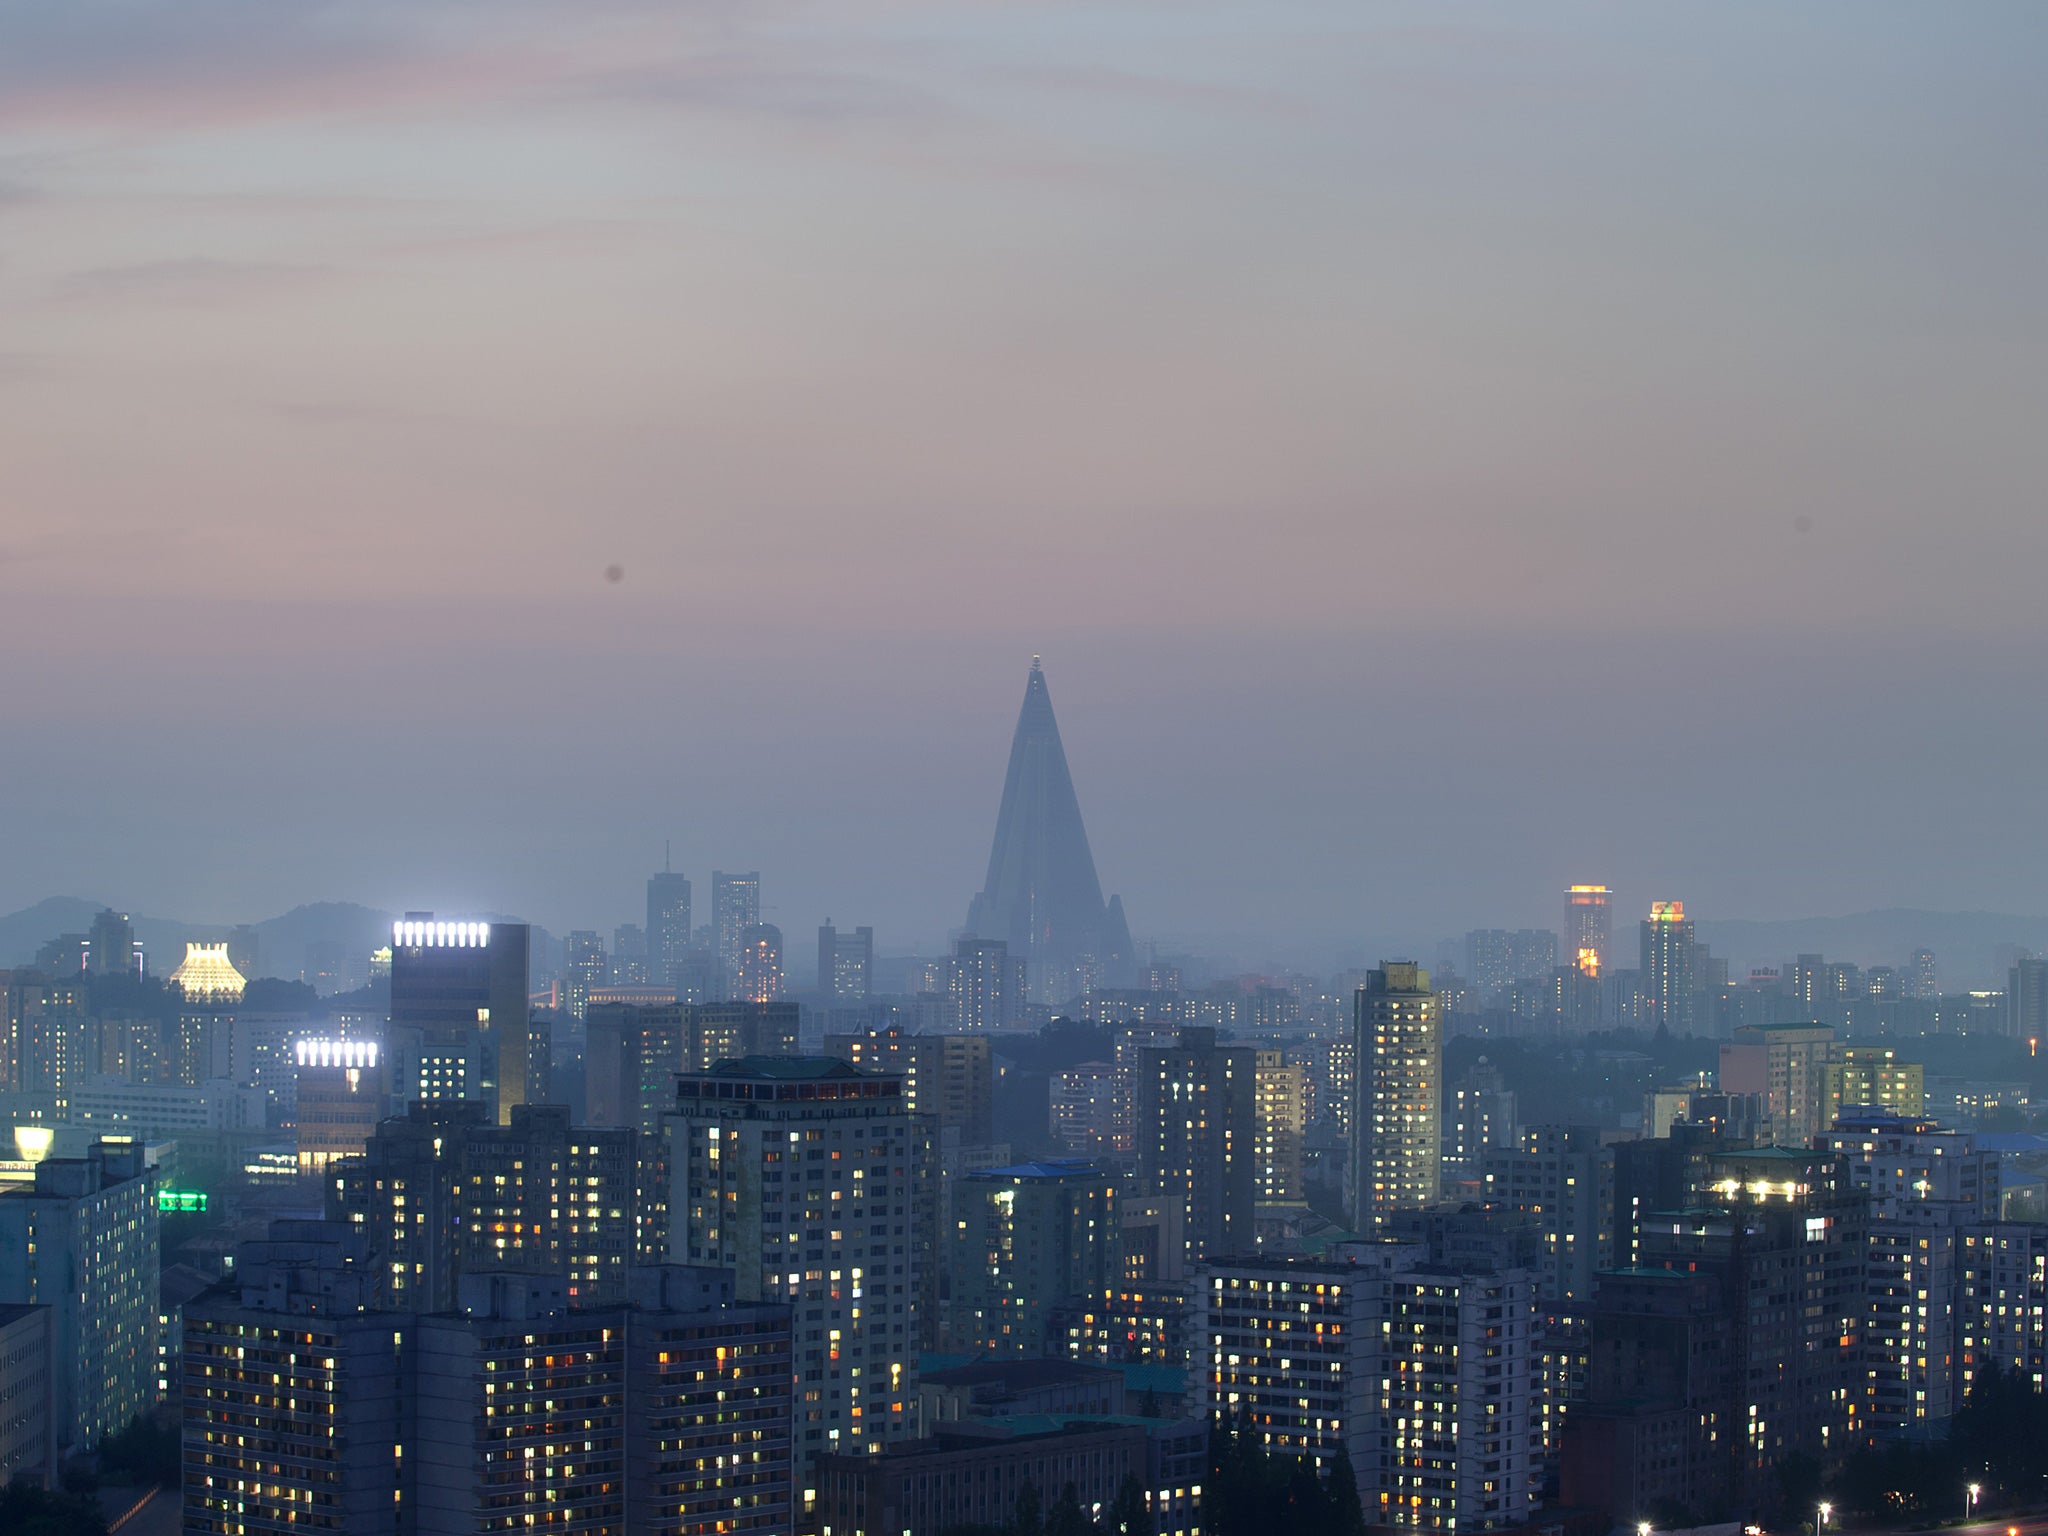 The skyline of Pyongyang